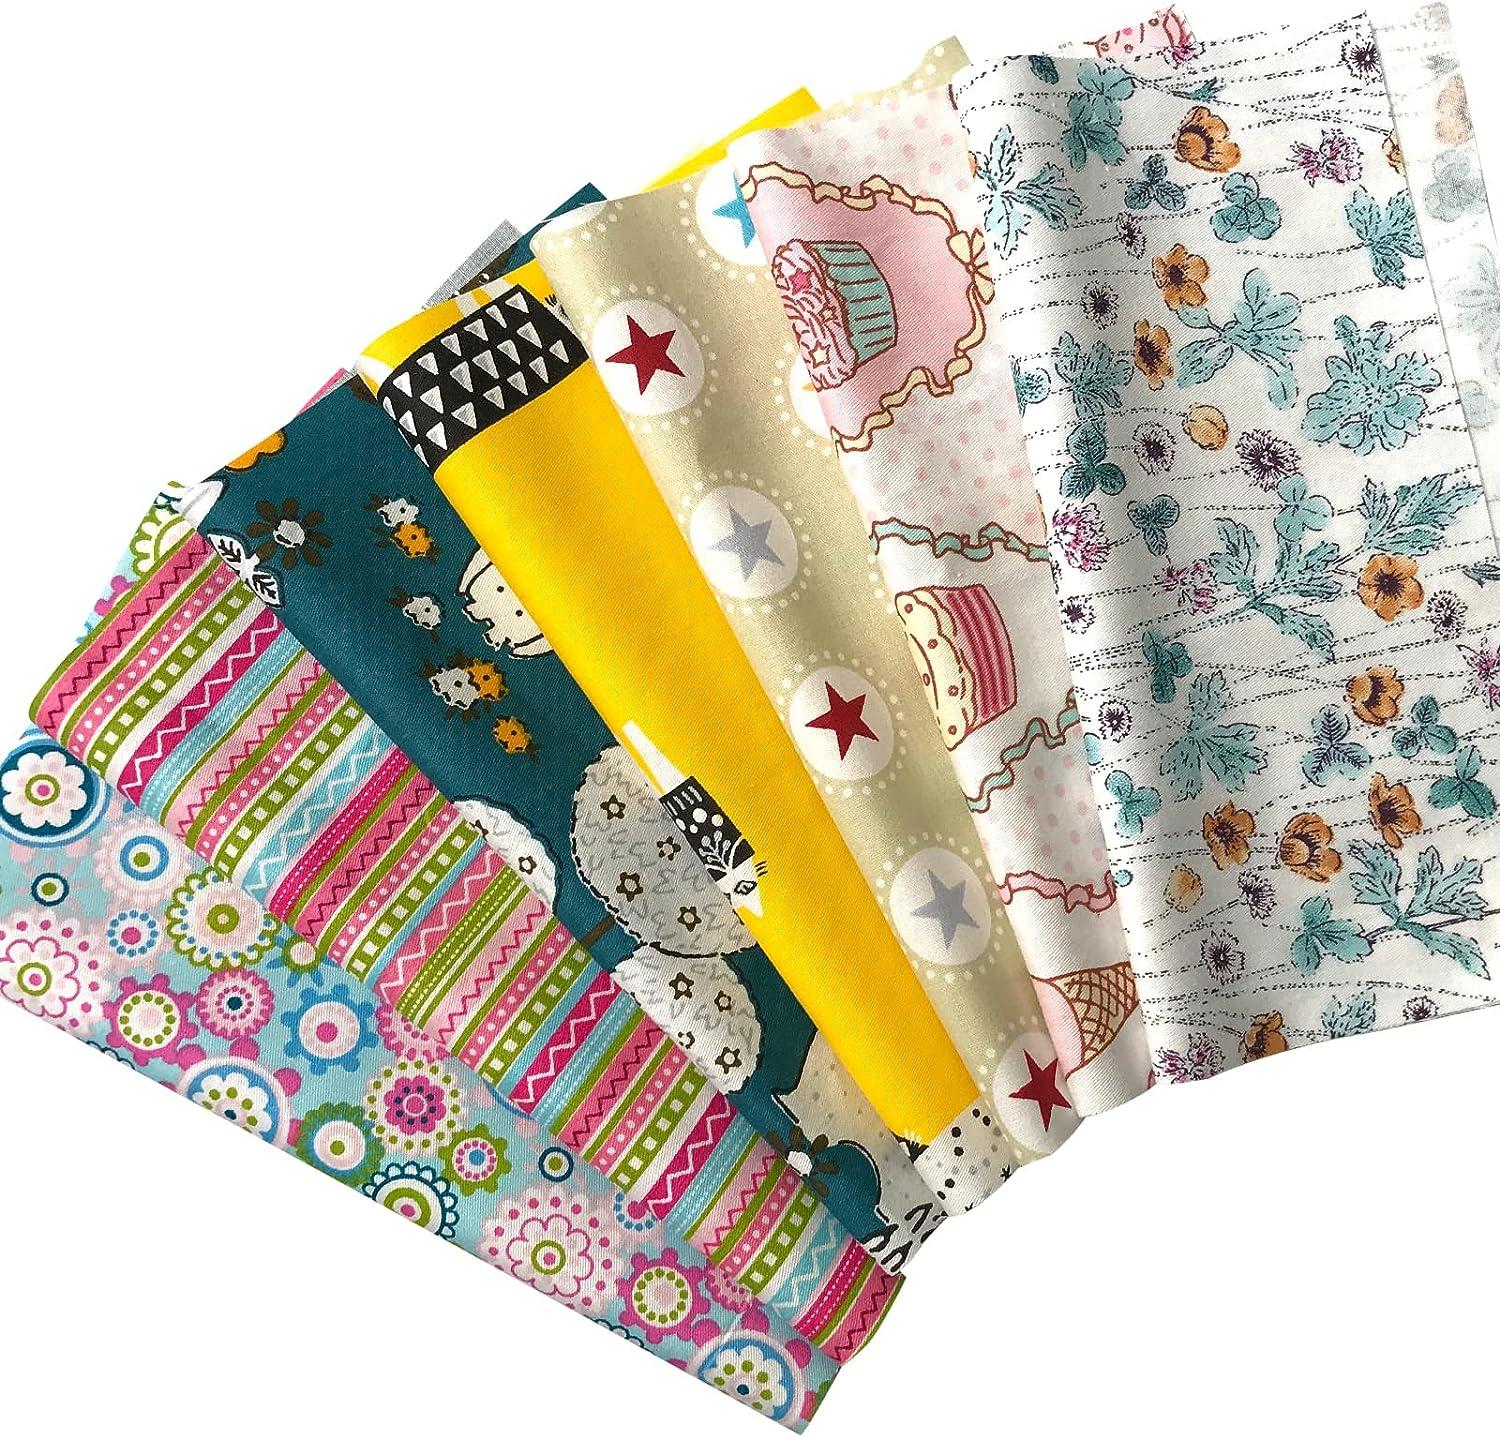 Cotton Quilting Fabric Misscrafts 50pcs 8 x 8 (20cm x 20cm